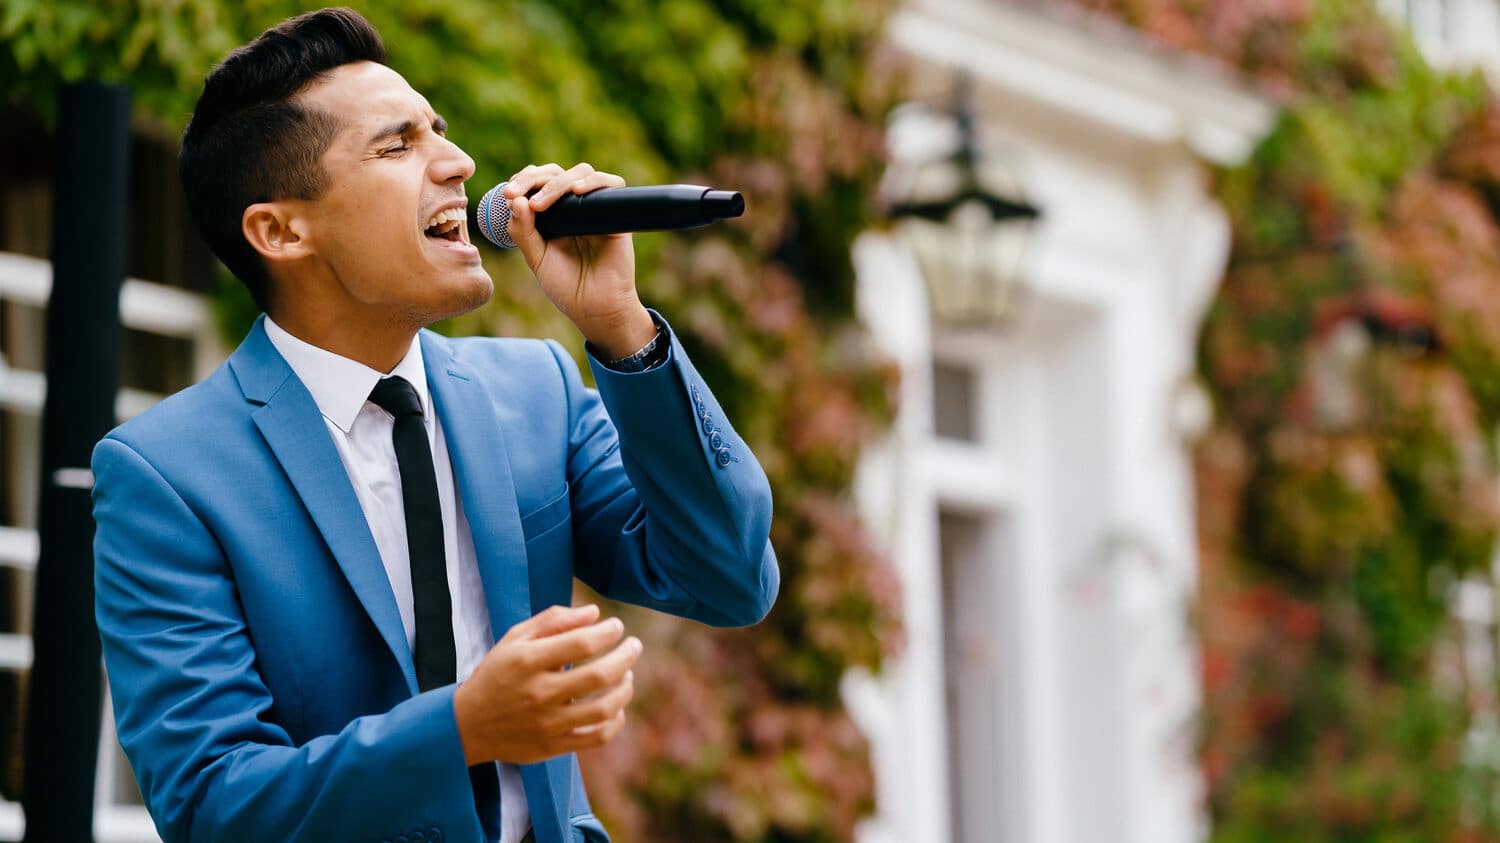 Male Singers for weddings